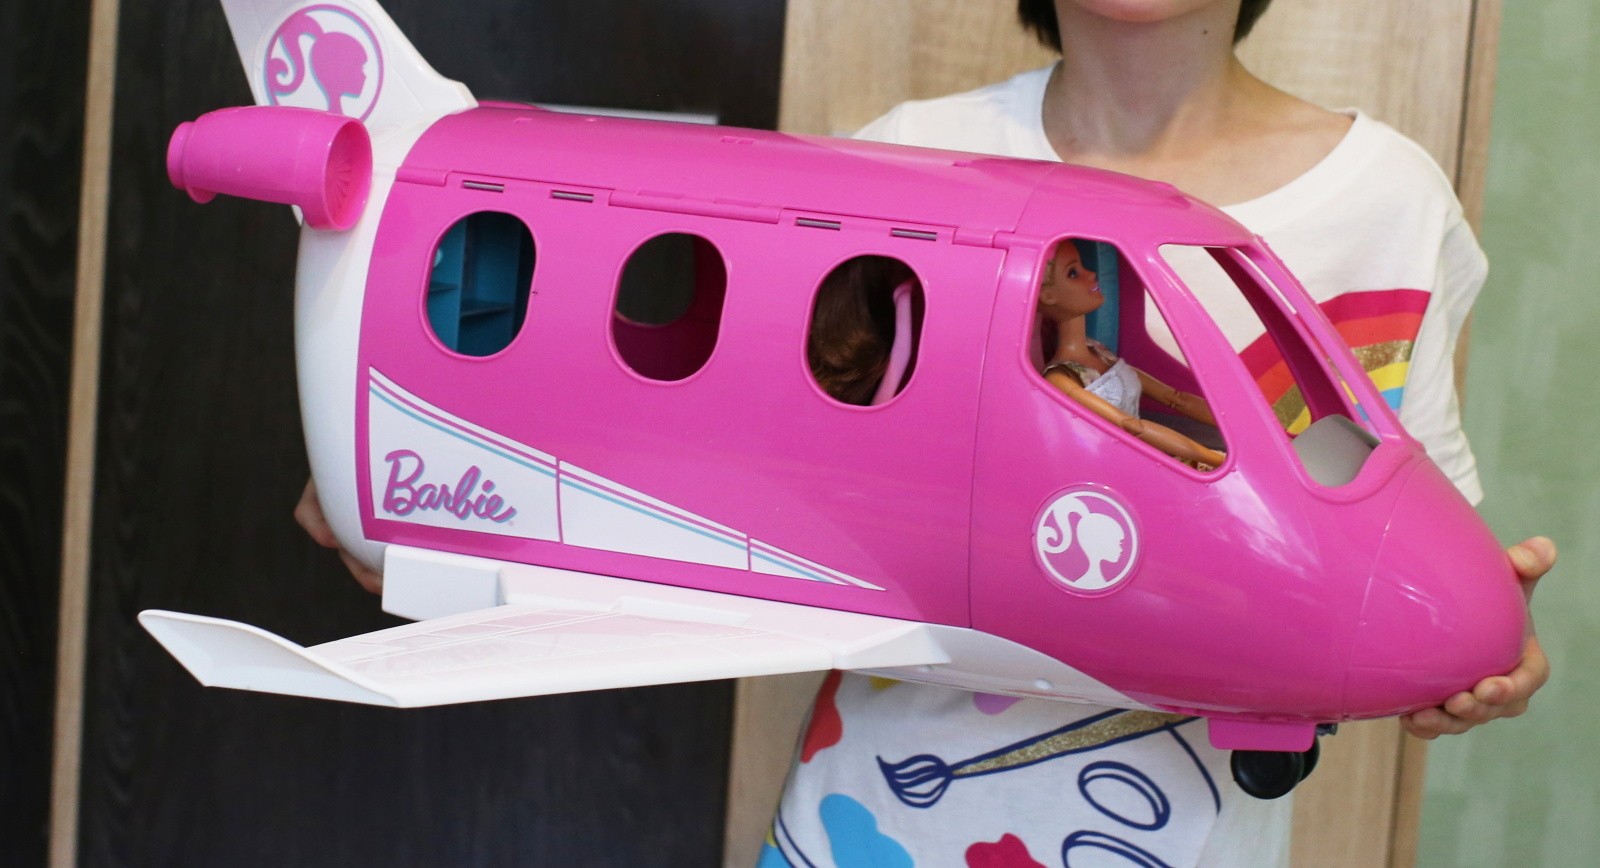 barbie airplane doll